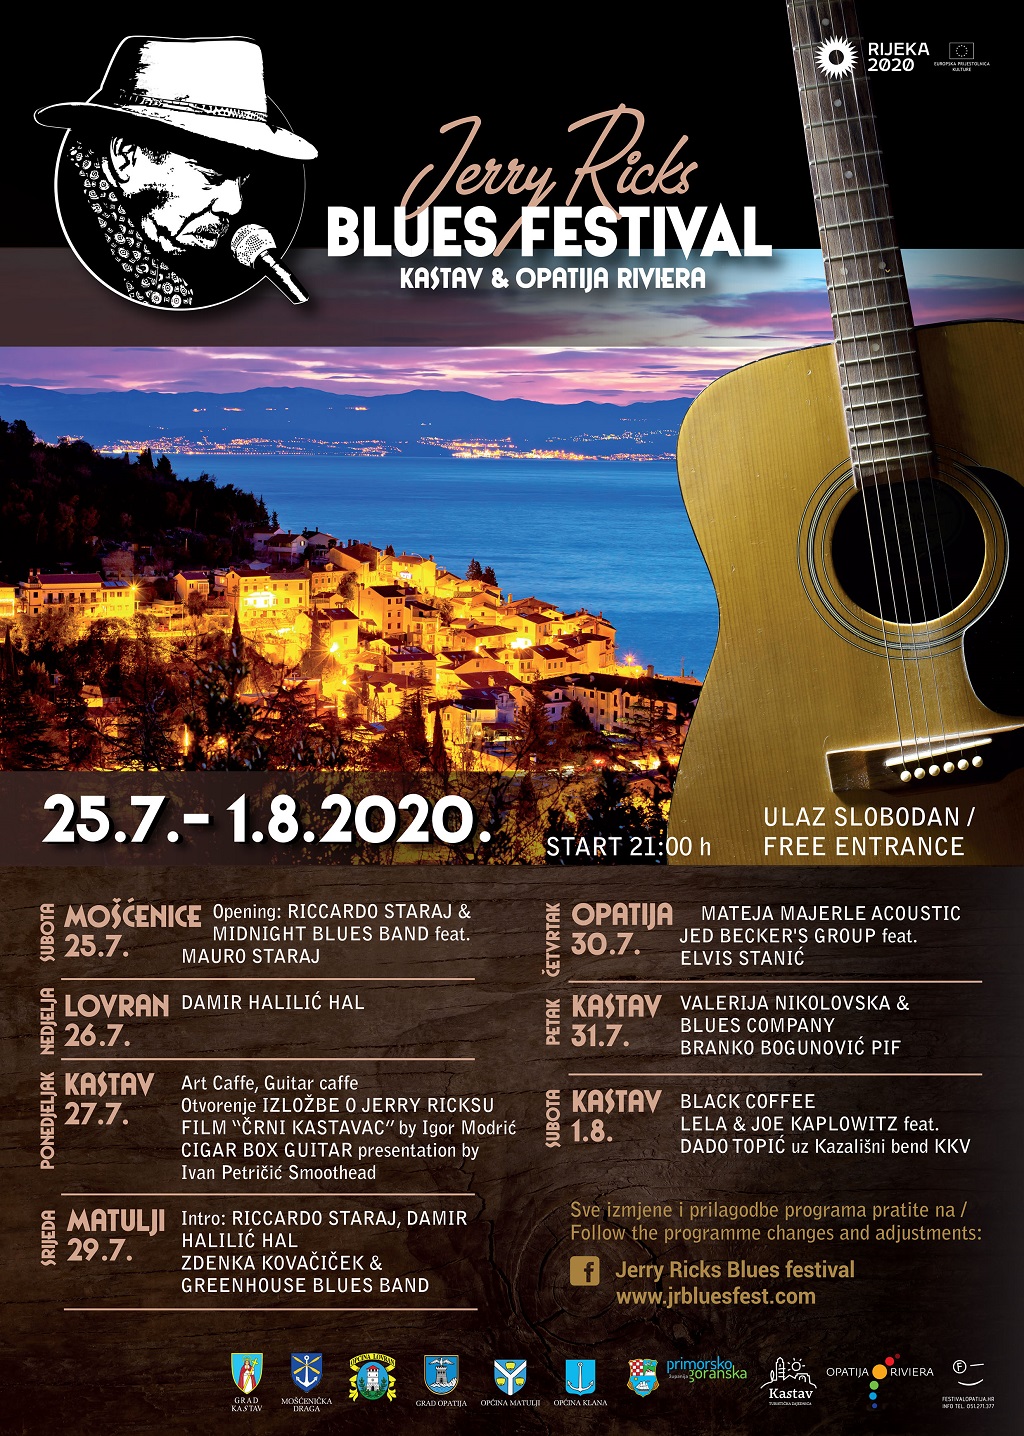 Jerry Ricks blues festival ide u reduciranom izdanju